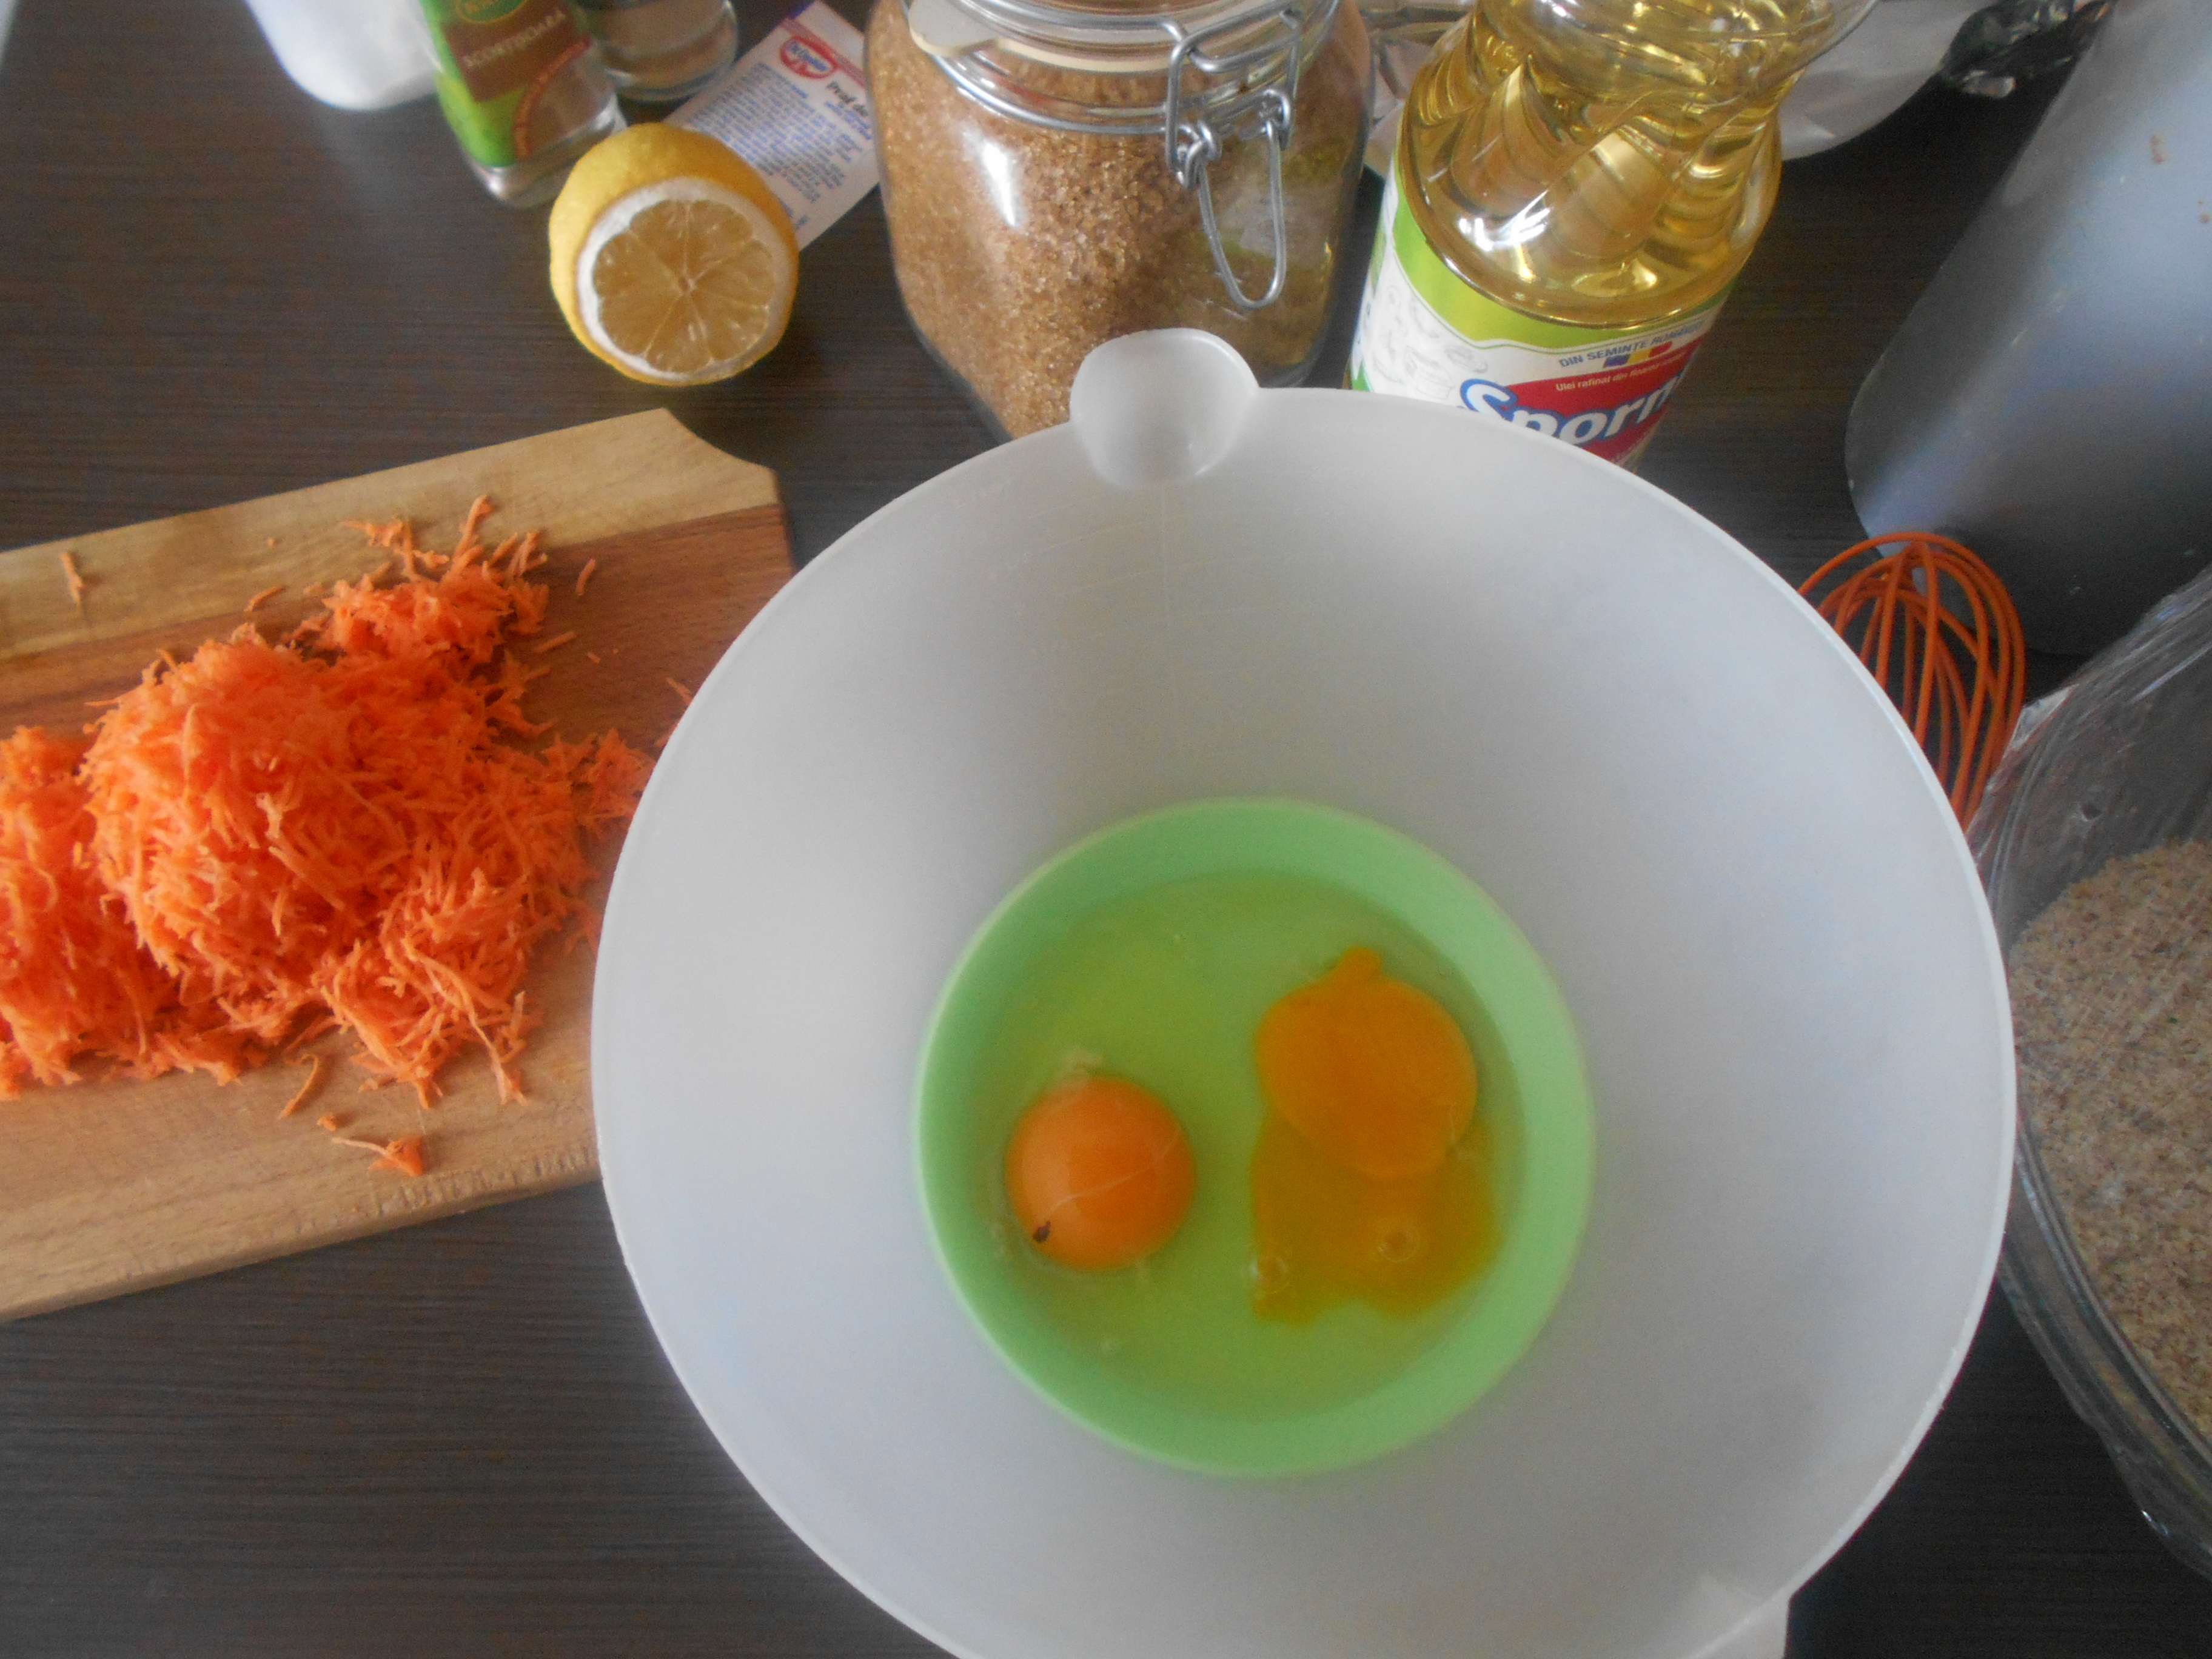 Desert prajitura cu morcovi si nuci la slow cooker Crock-Pot